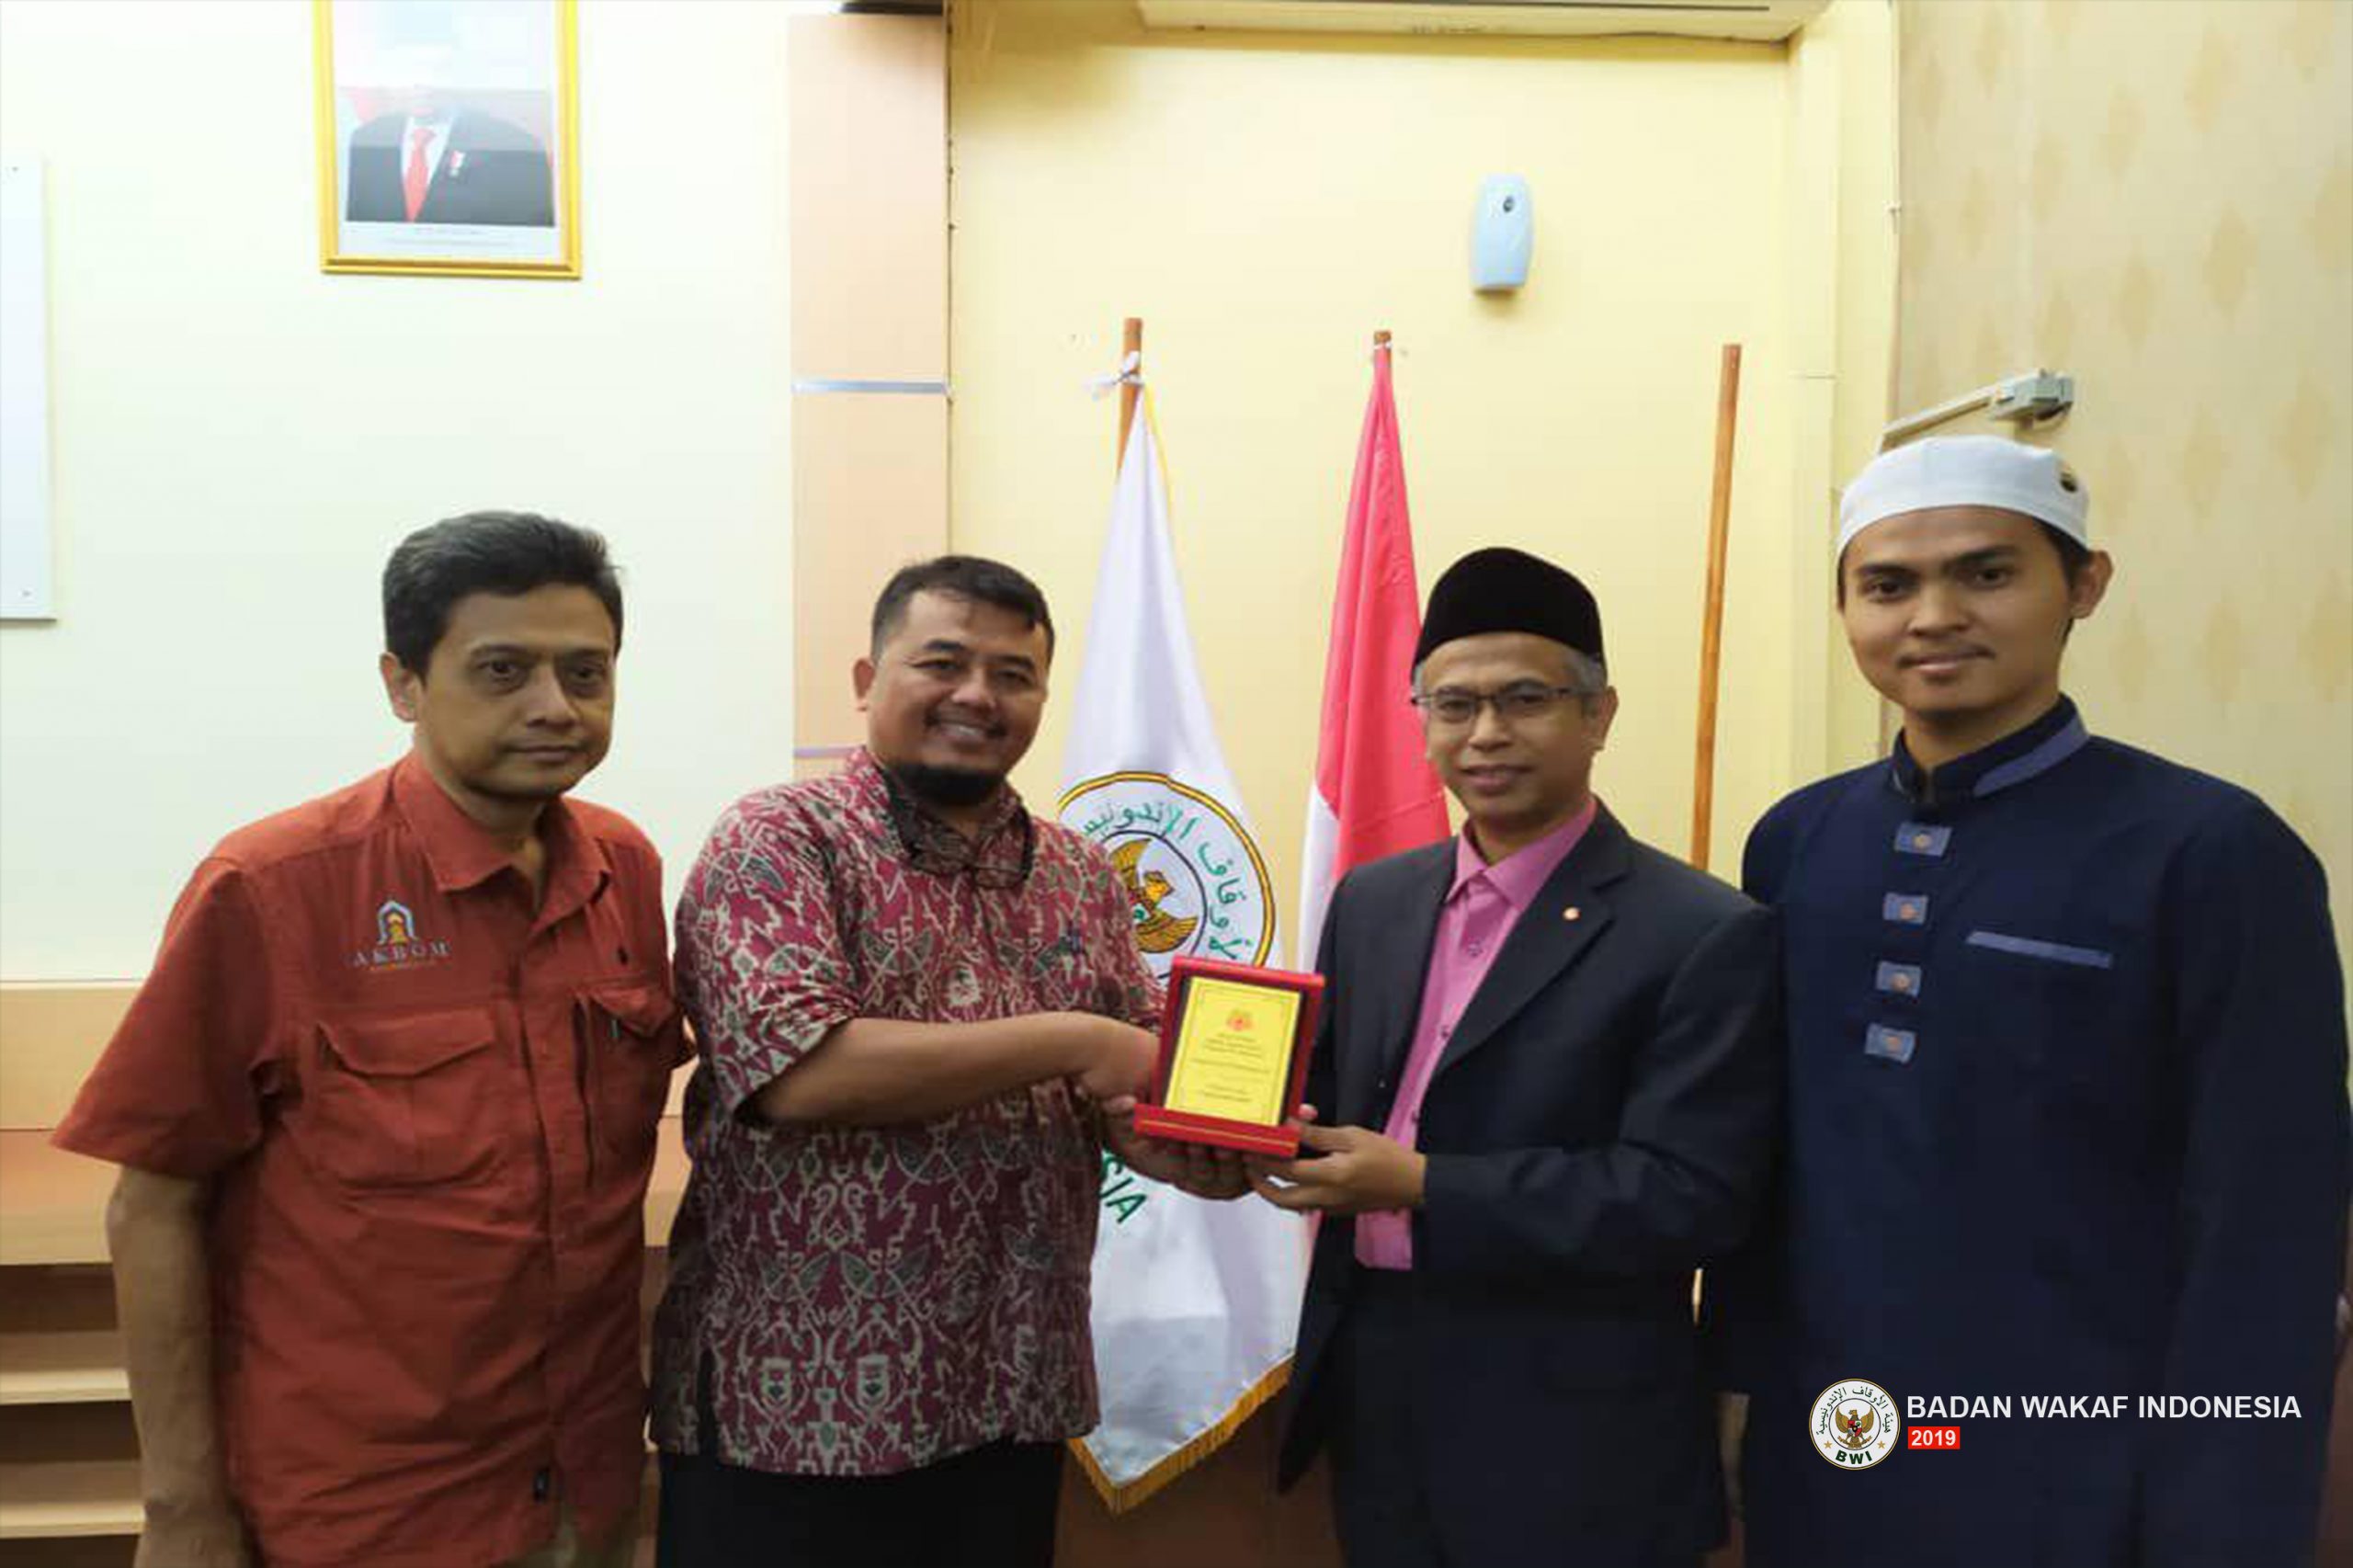 Majlis Agama Islam Wilayah Persekutuan Maiwp Malaysia Kunjungi Badan Wakaf Indonesia Badan Wakaf Indonesia